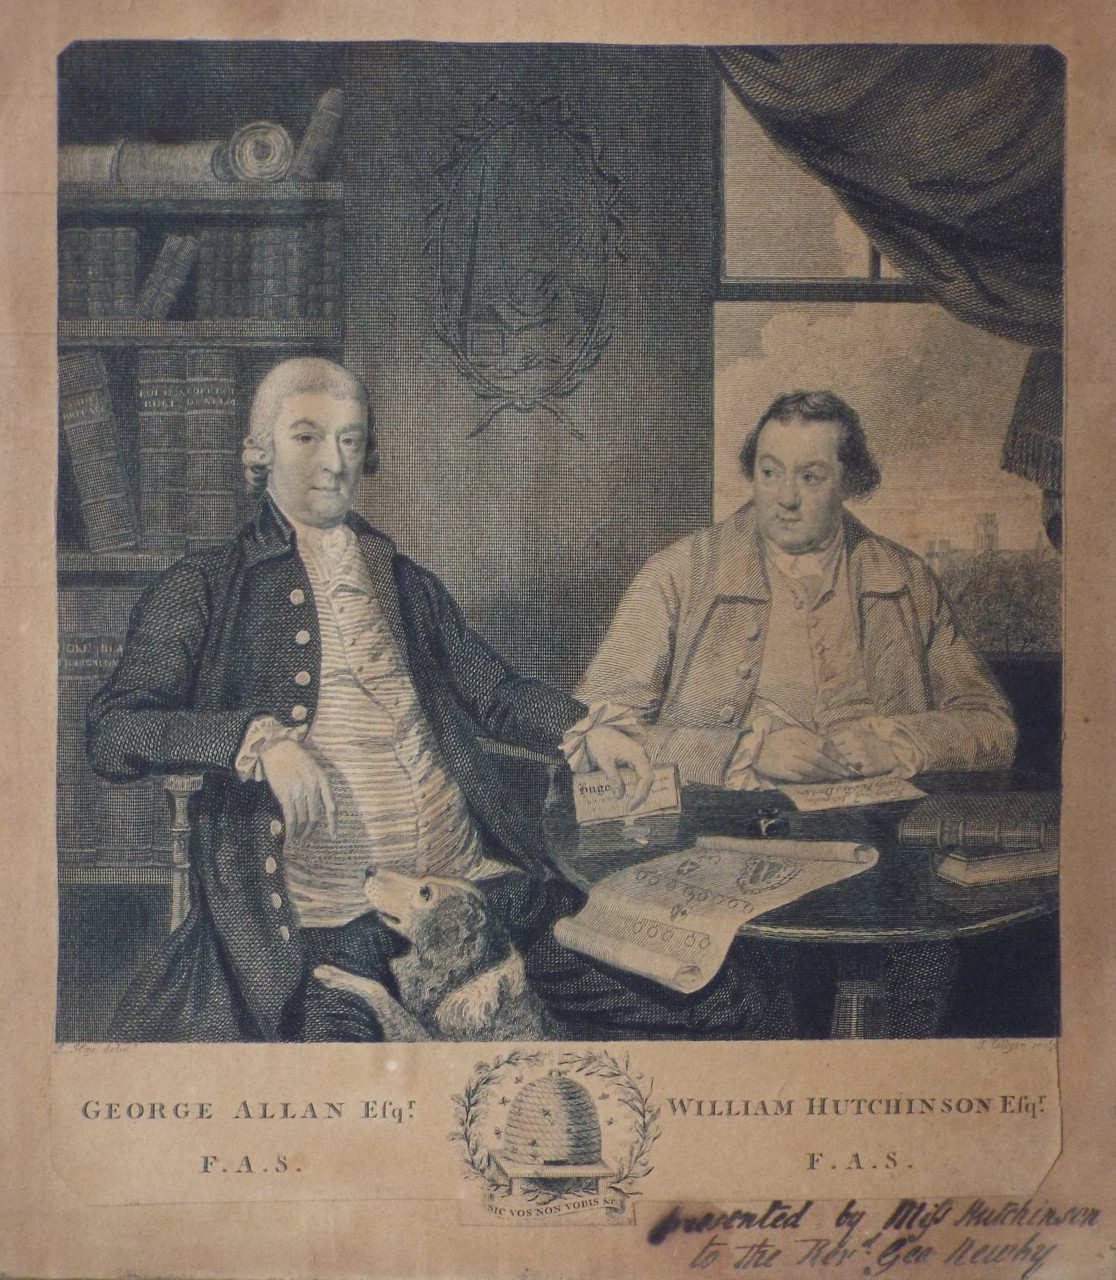 Print - George Allan Esqr. F.A.S. William Hutchinson Esqr. F.A.S. - Collyer